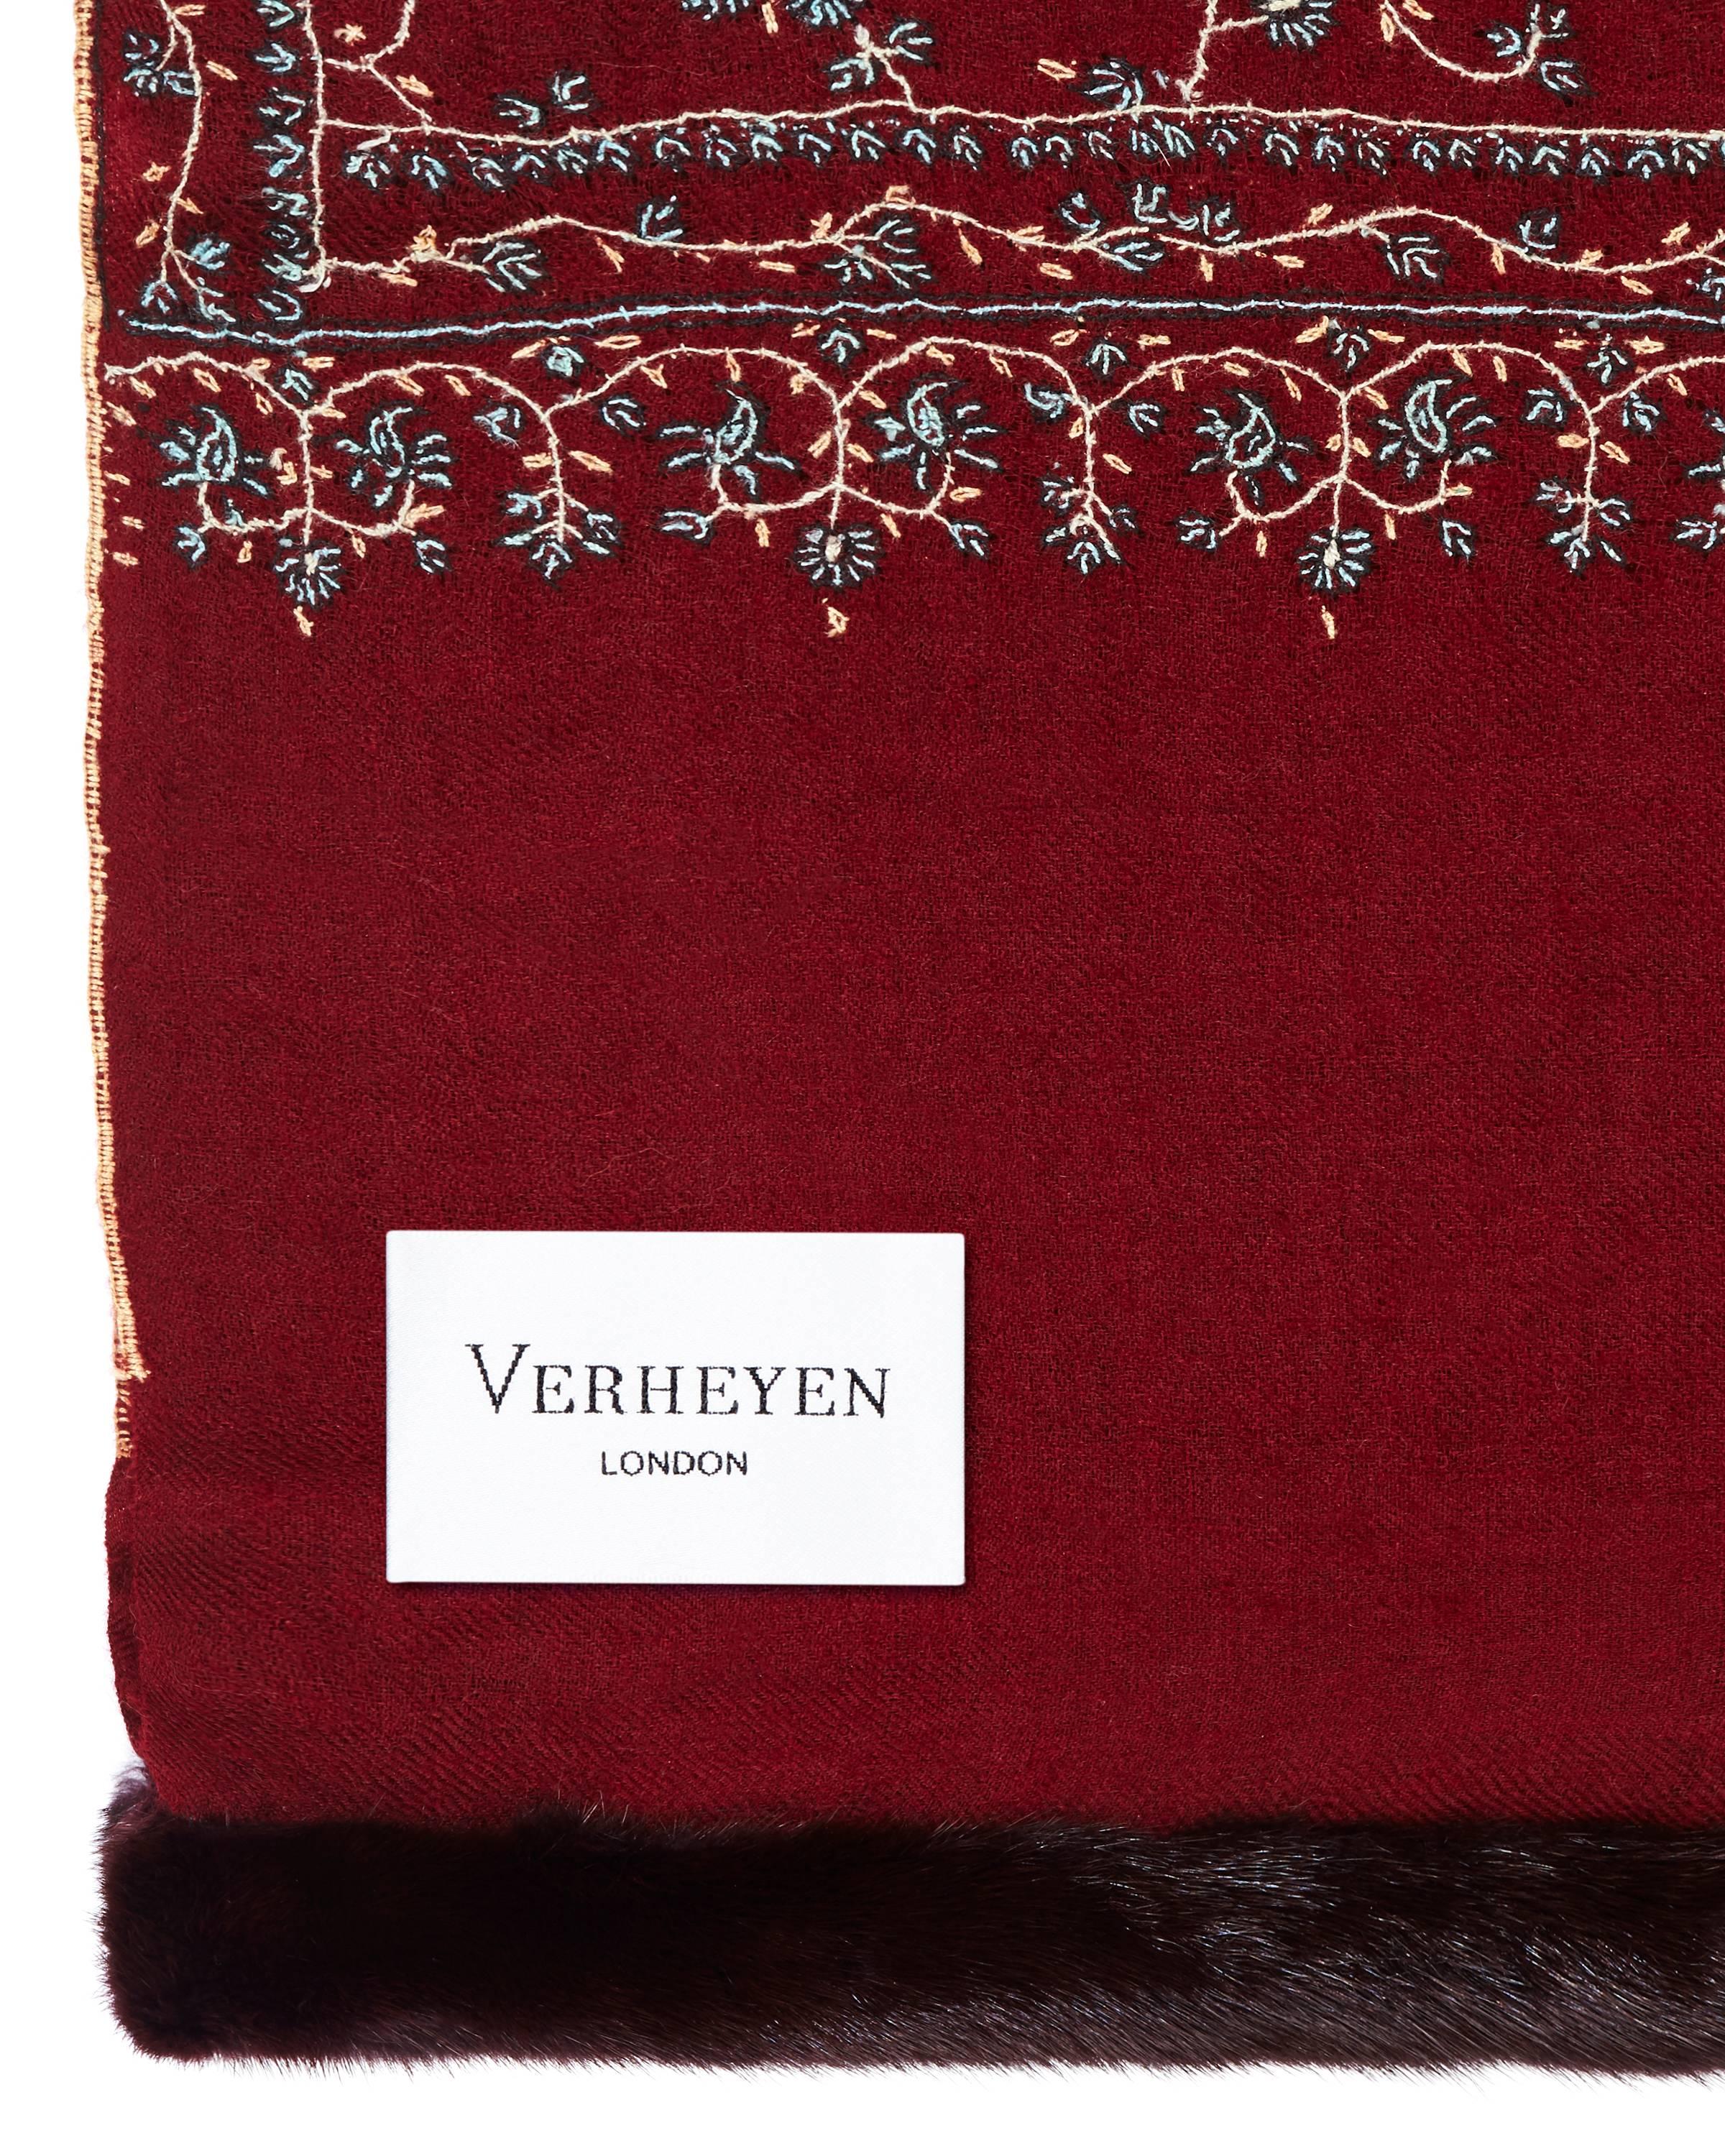 Red Limited Edition Verheyen London Hand embroidered Mink Fur Trimmed Cashmere Shawl